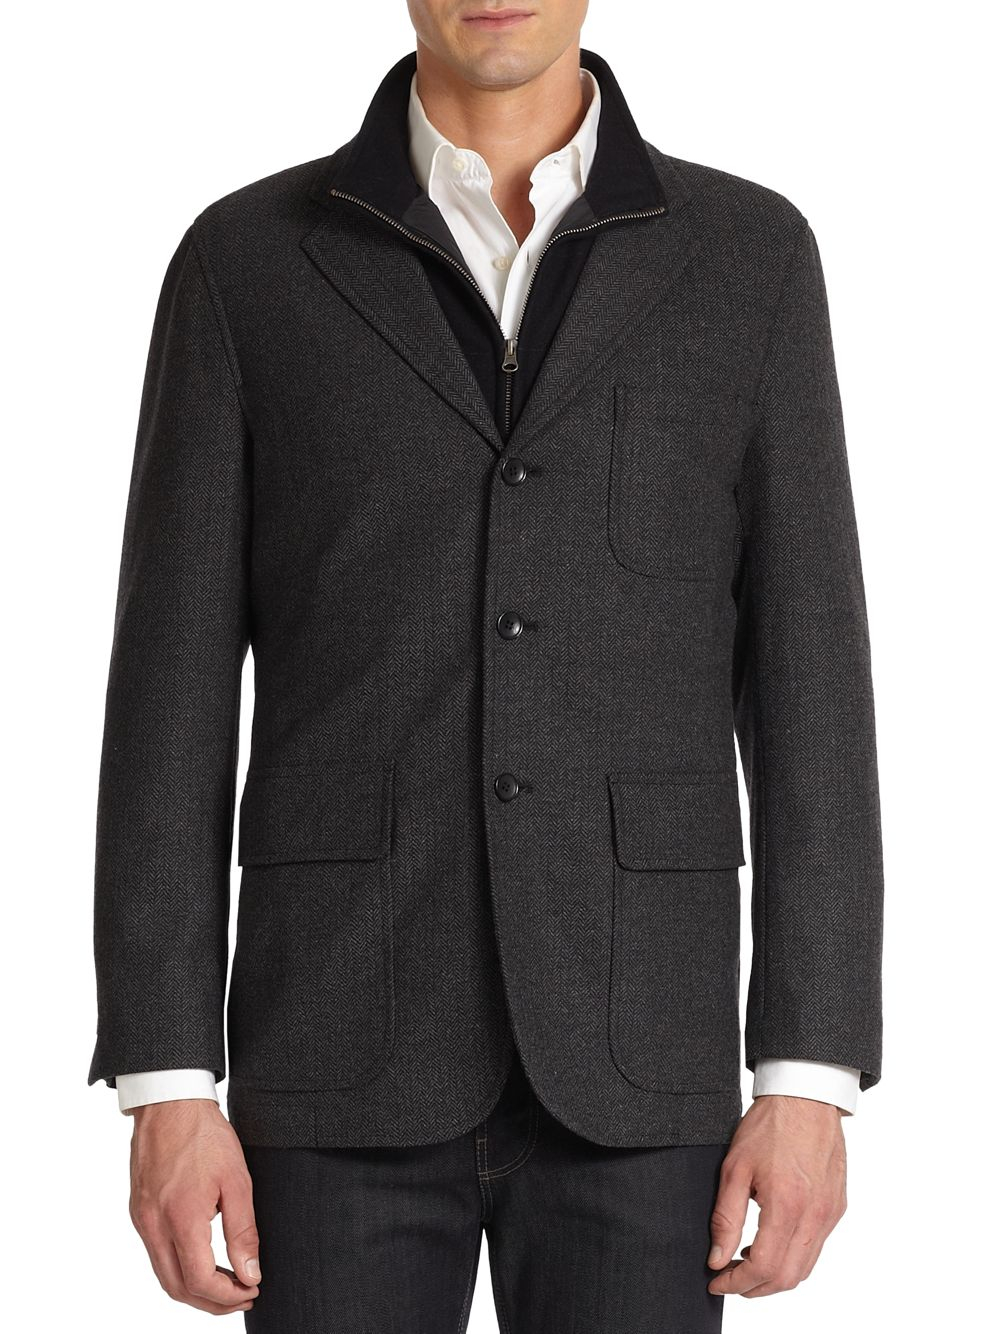 Lyst - Saks Fifth Avenue Black Label Herringbone Blazer Quilted Vest in ...